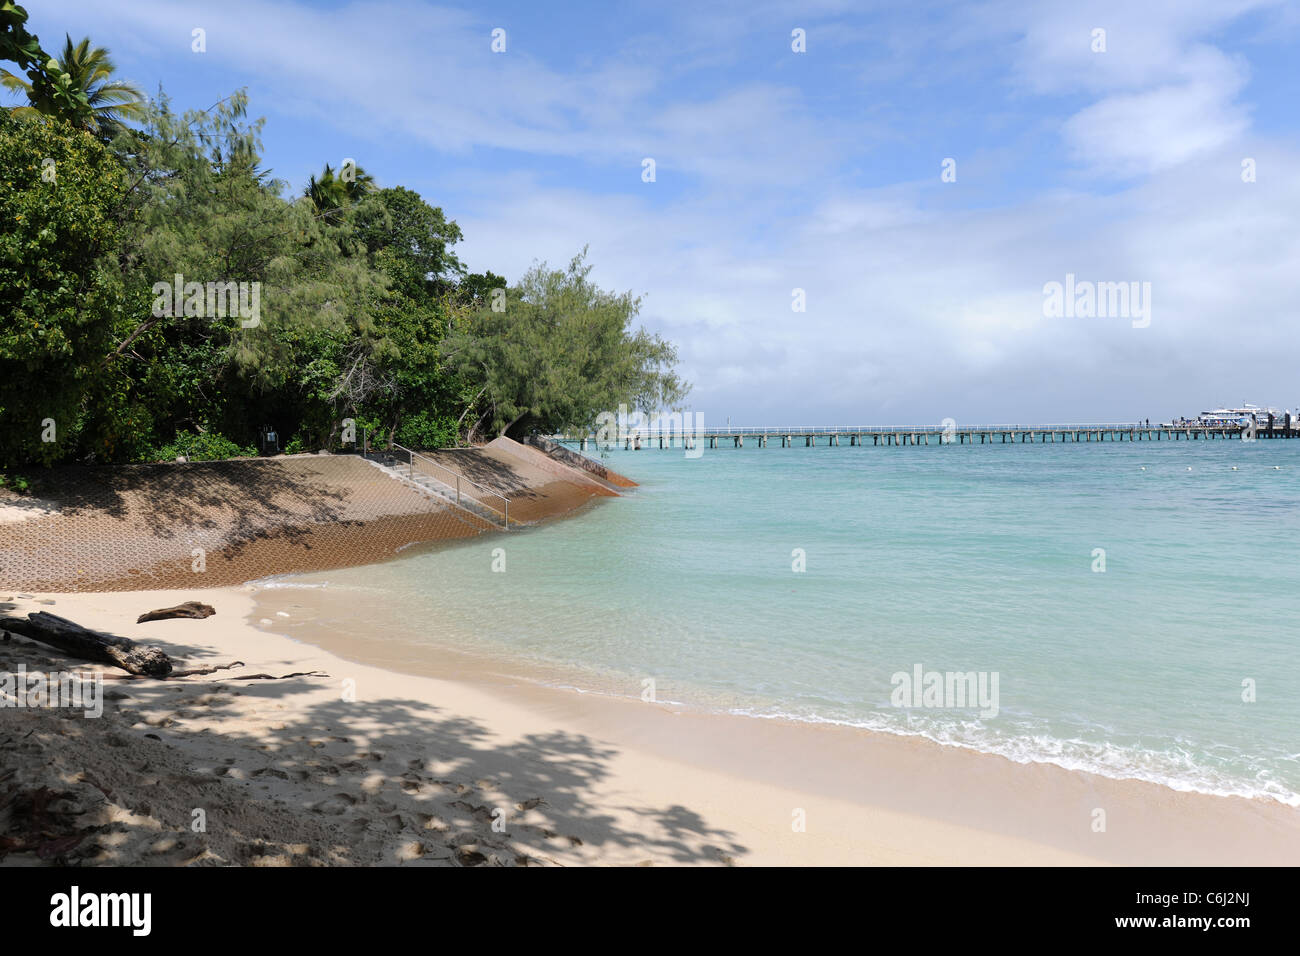 sea wall to prevent beach erosion, Green Island, Great Barrier reef, Queensland, Australia Stock Photo